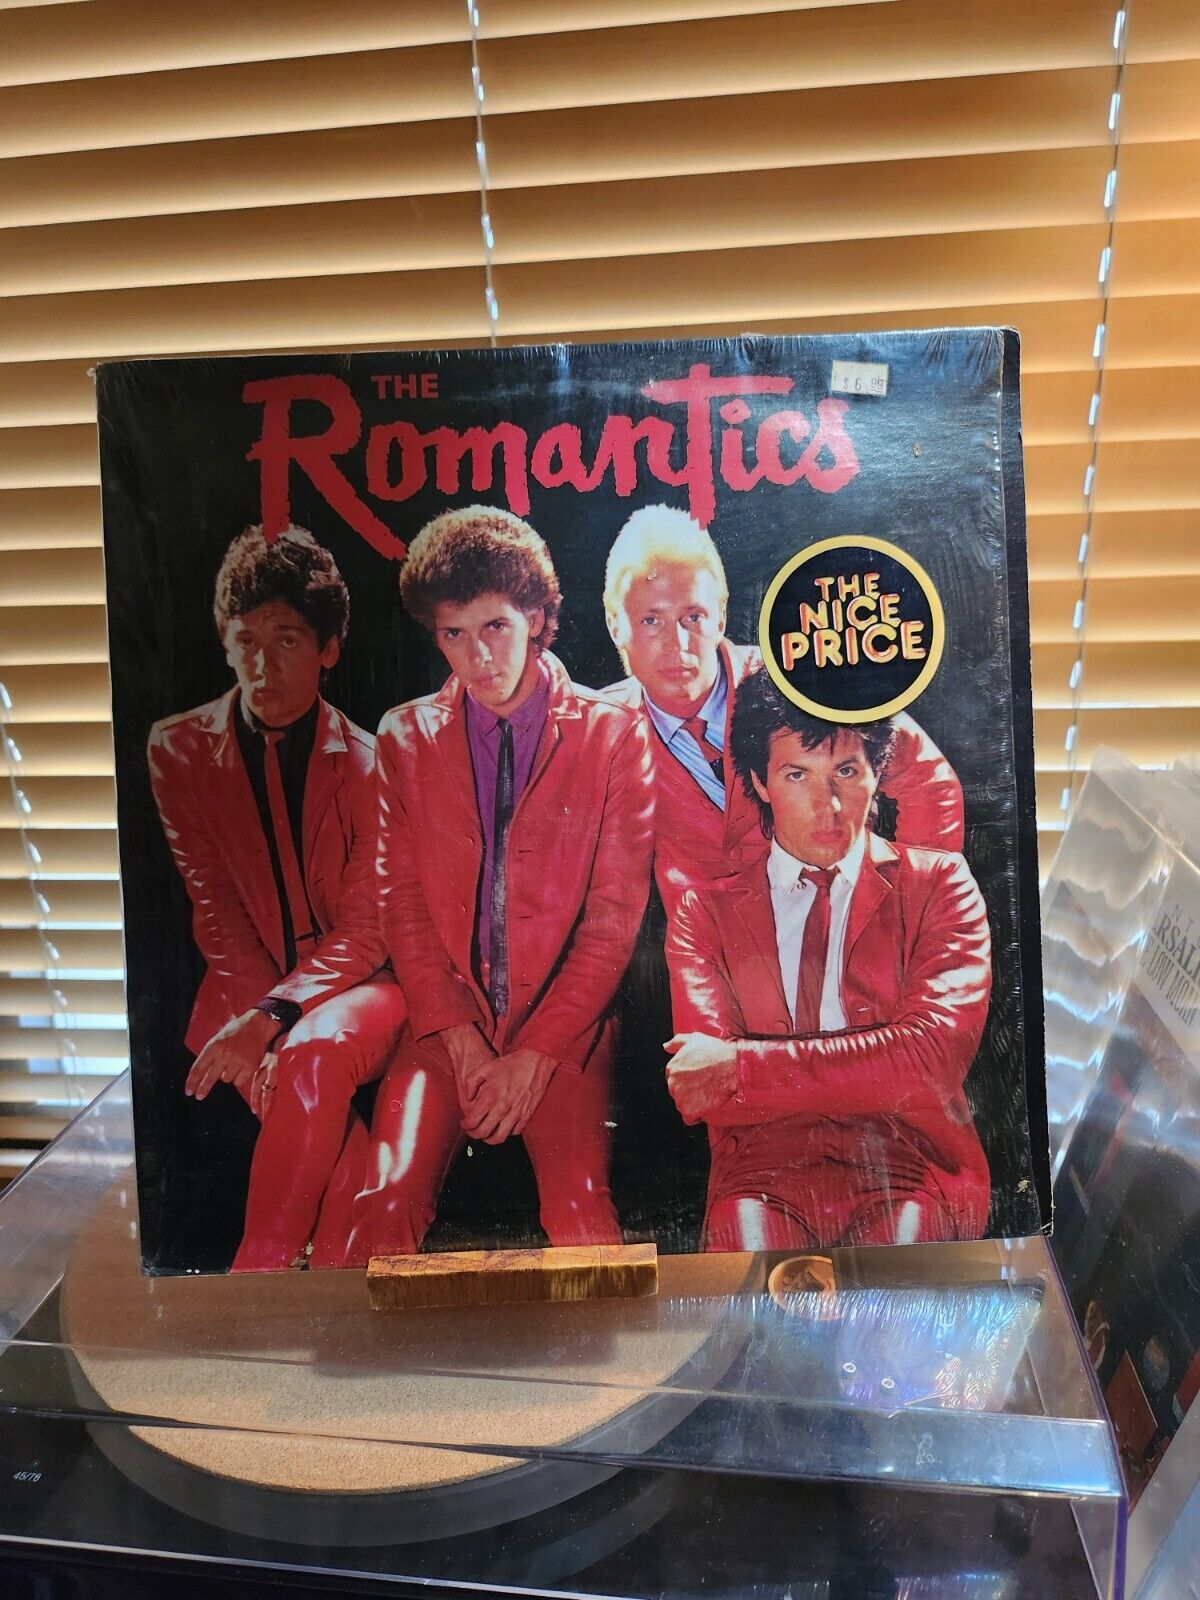 The Romantics, The Romantics, 1980 1st Nemperor Press, JZ-36273, VG+/VG+